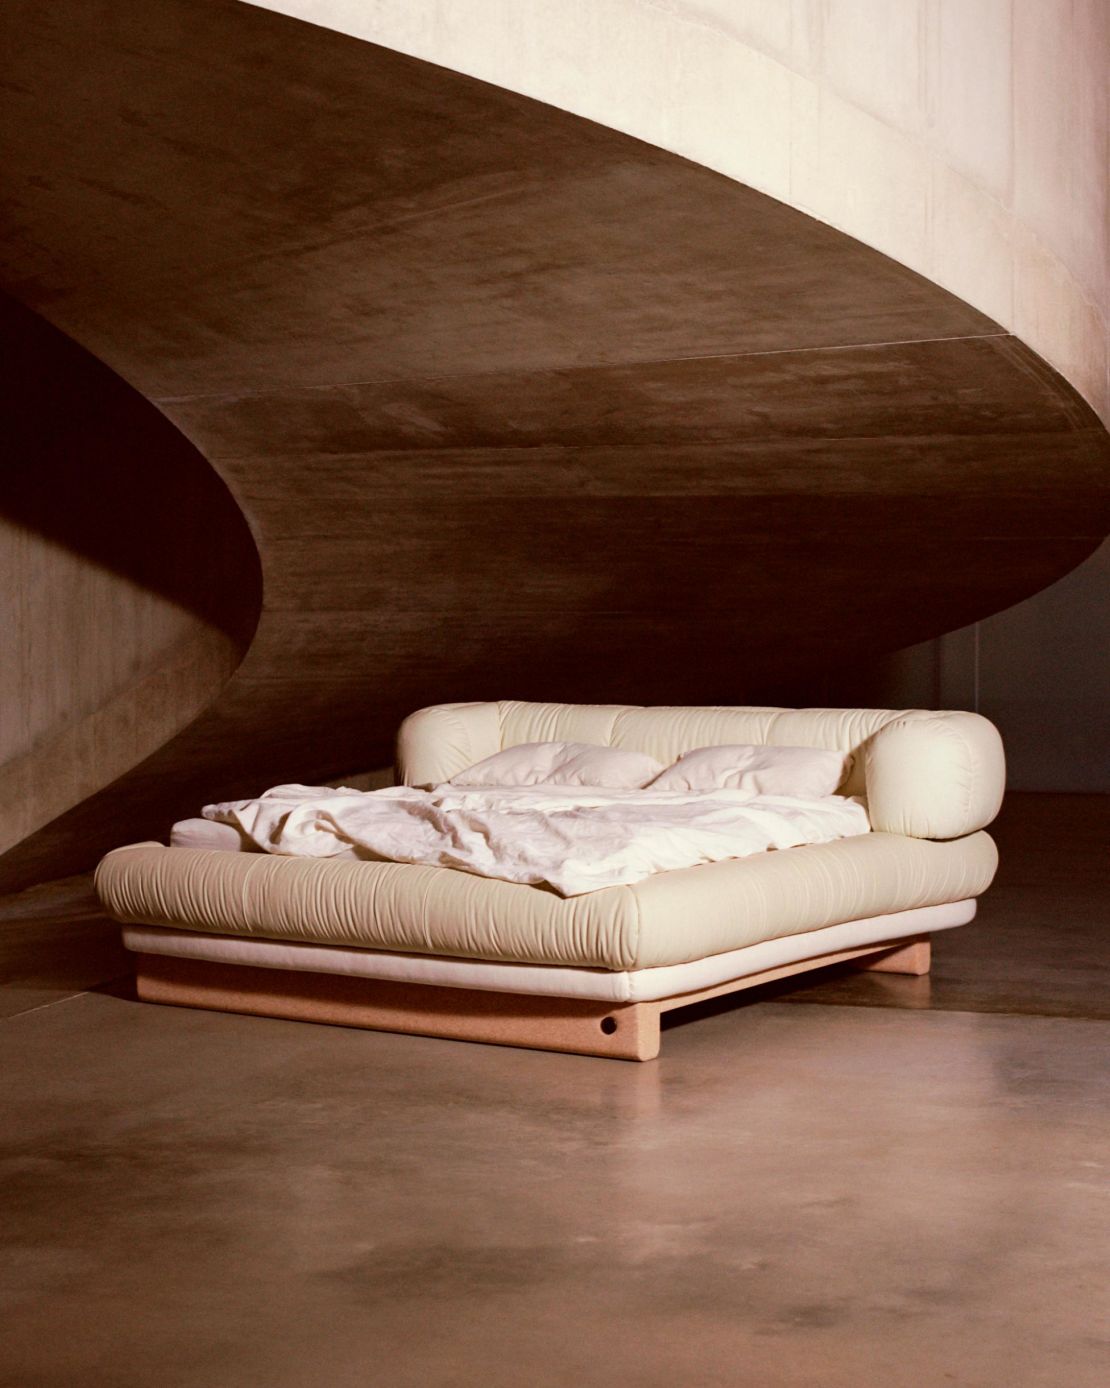 Toogood's Birkenstock bed, loosely modelled on the sandal's footbed. 